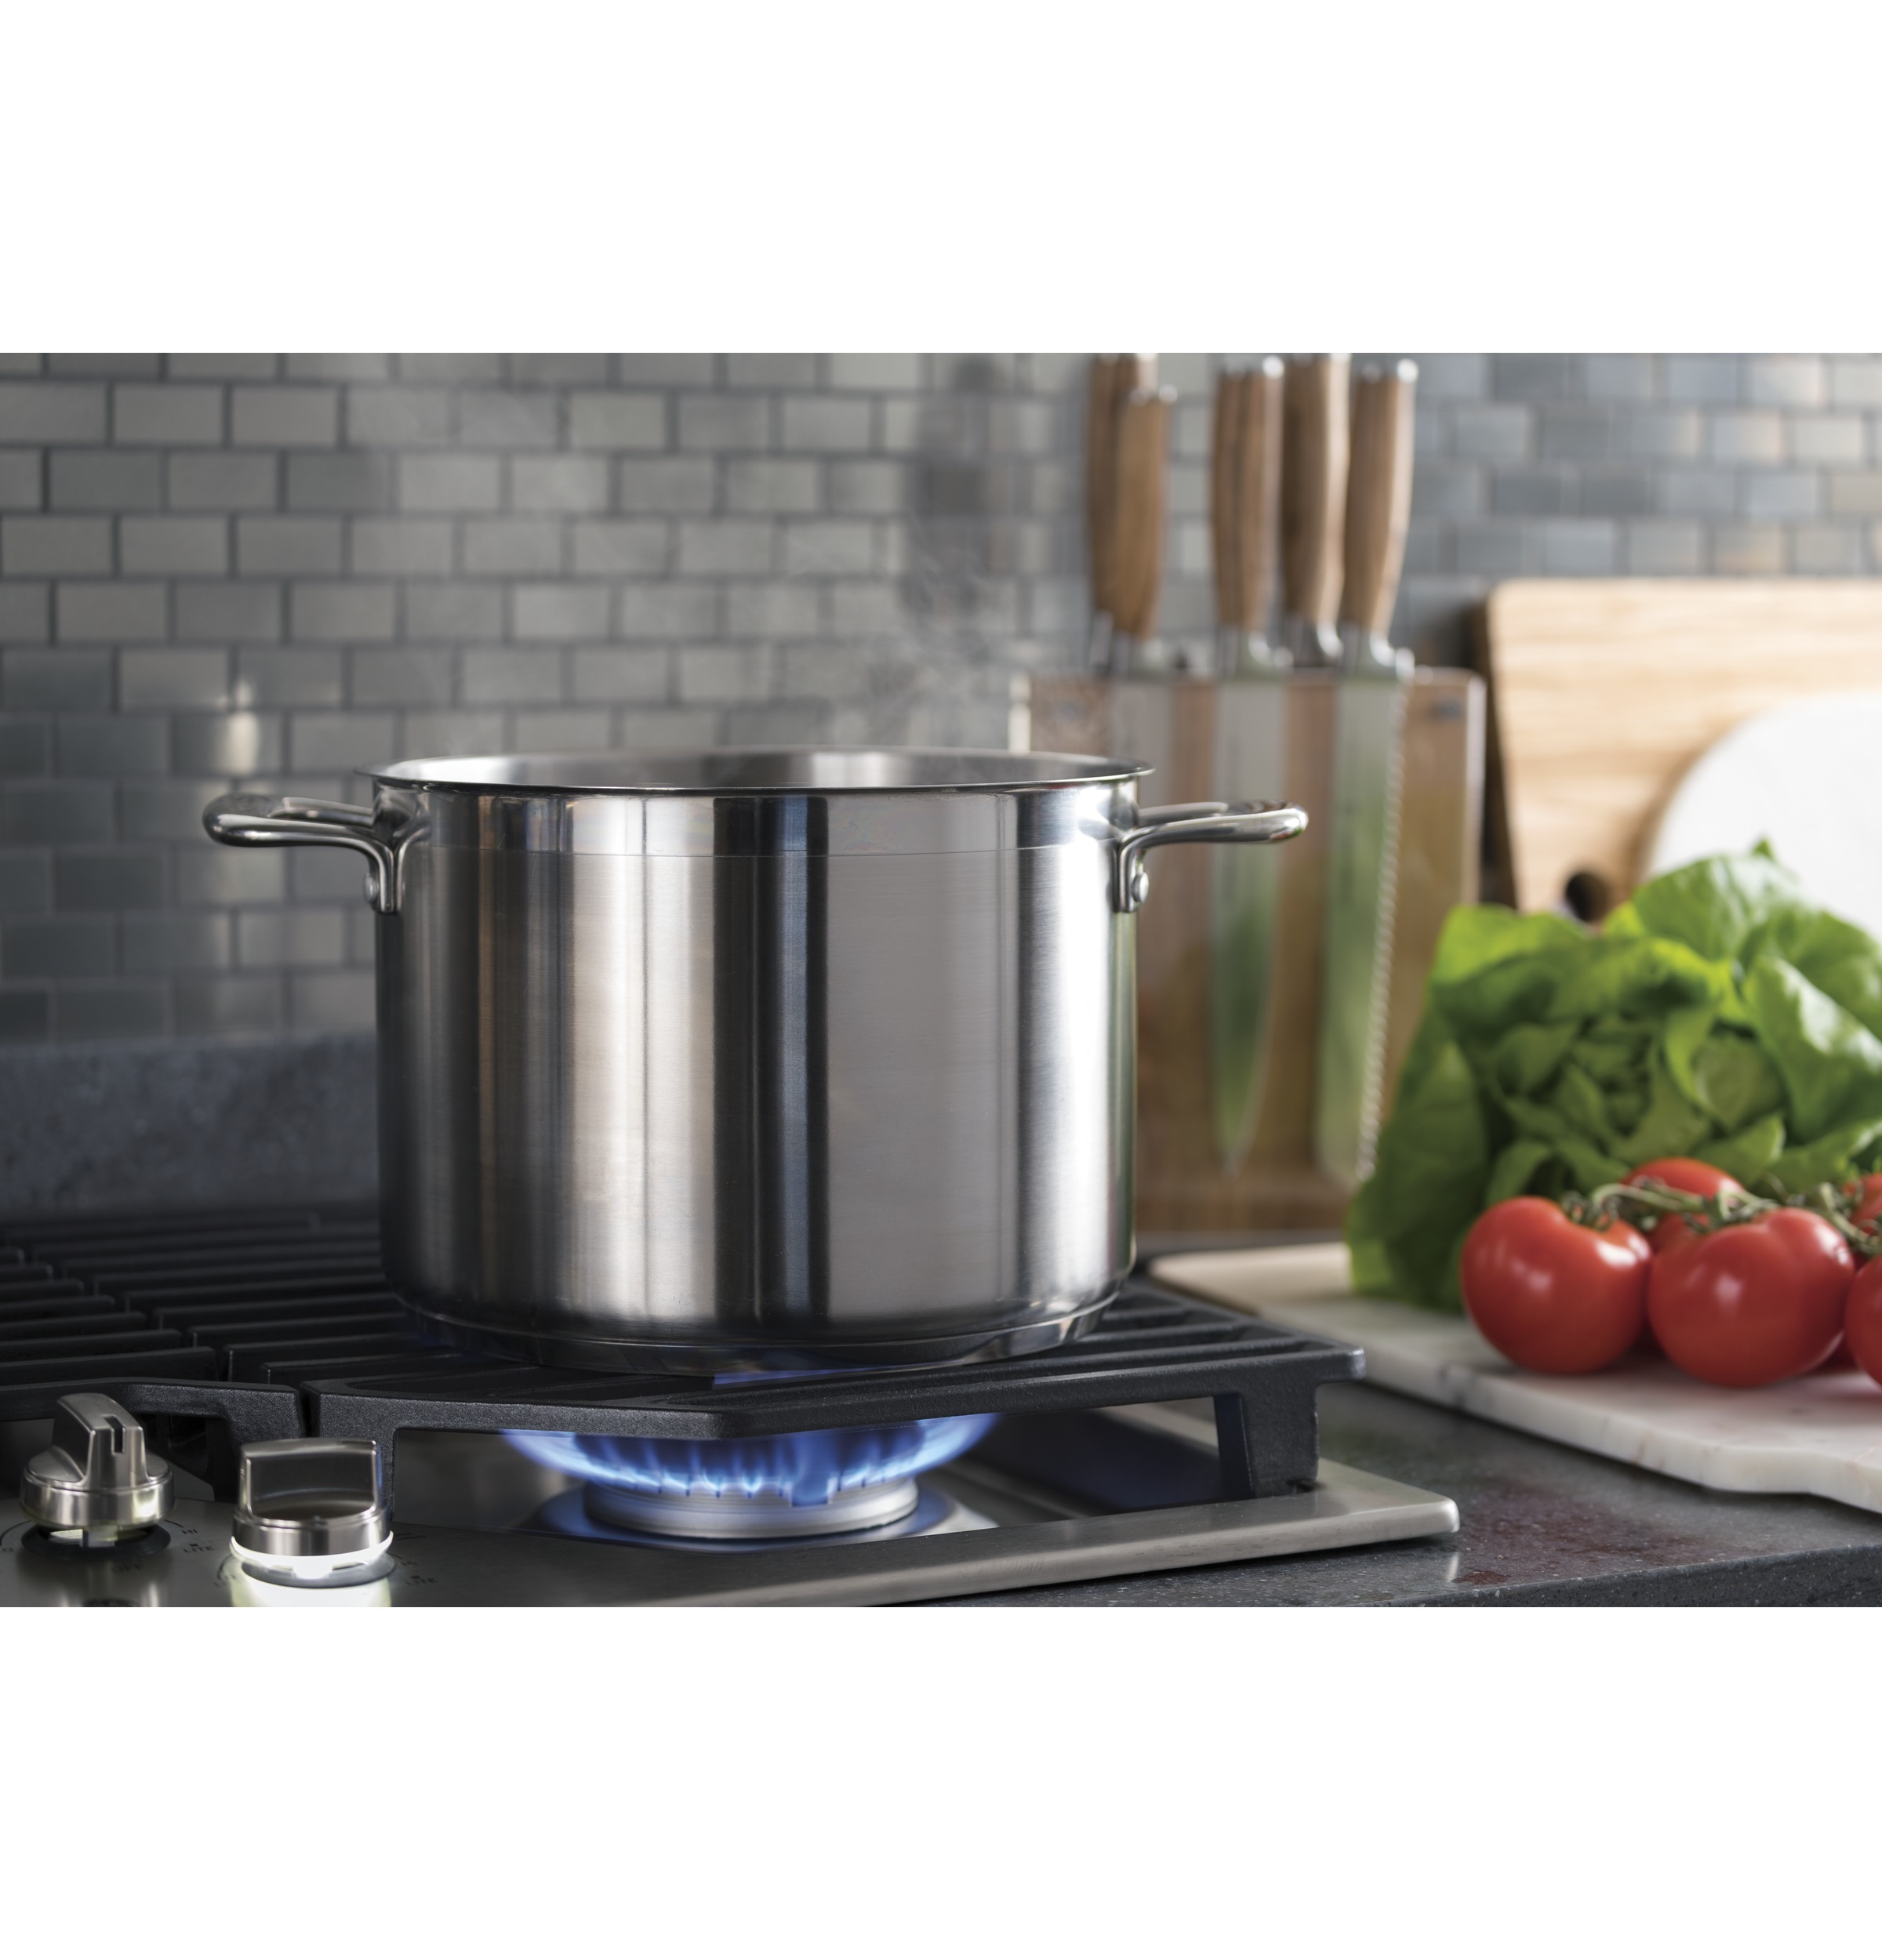 GE Profile 36 Built-In Electric Cooktop Stainless Steel  - Best Buy